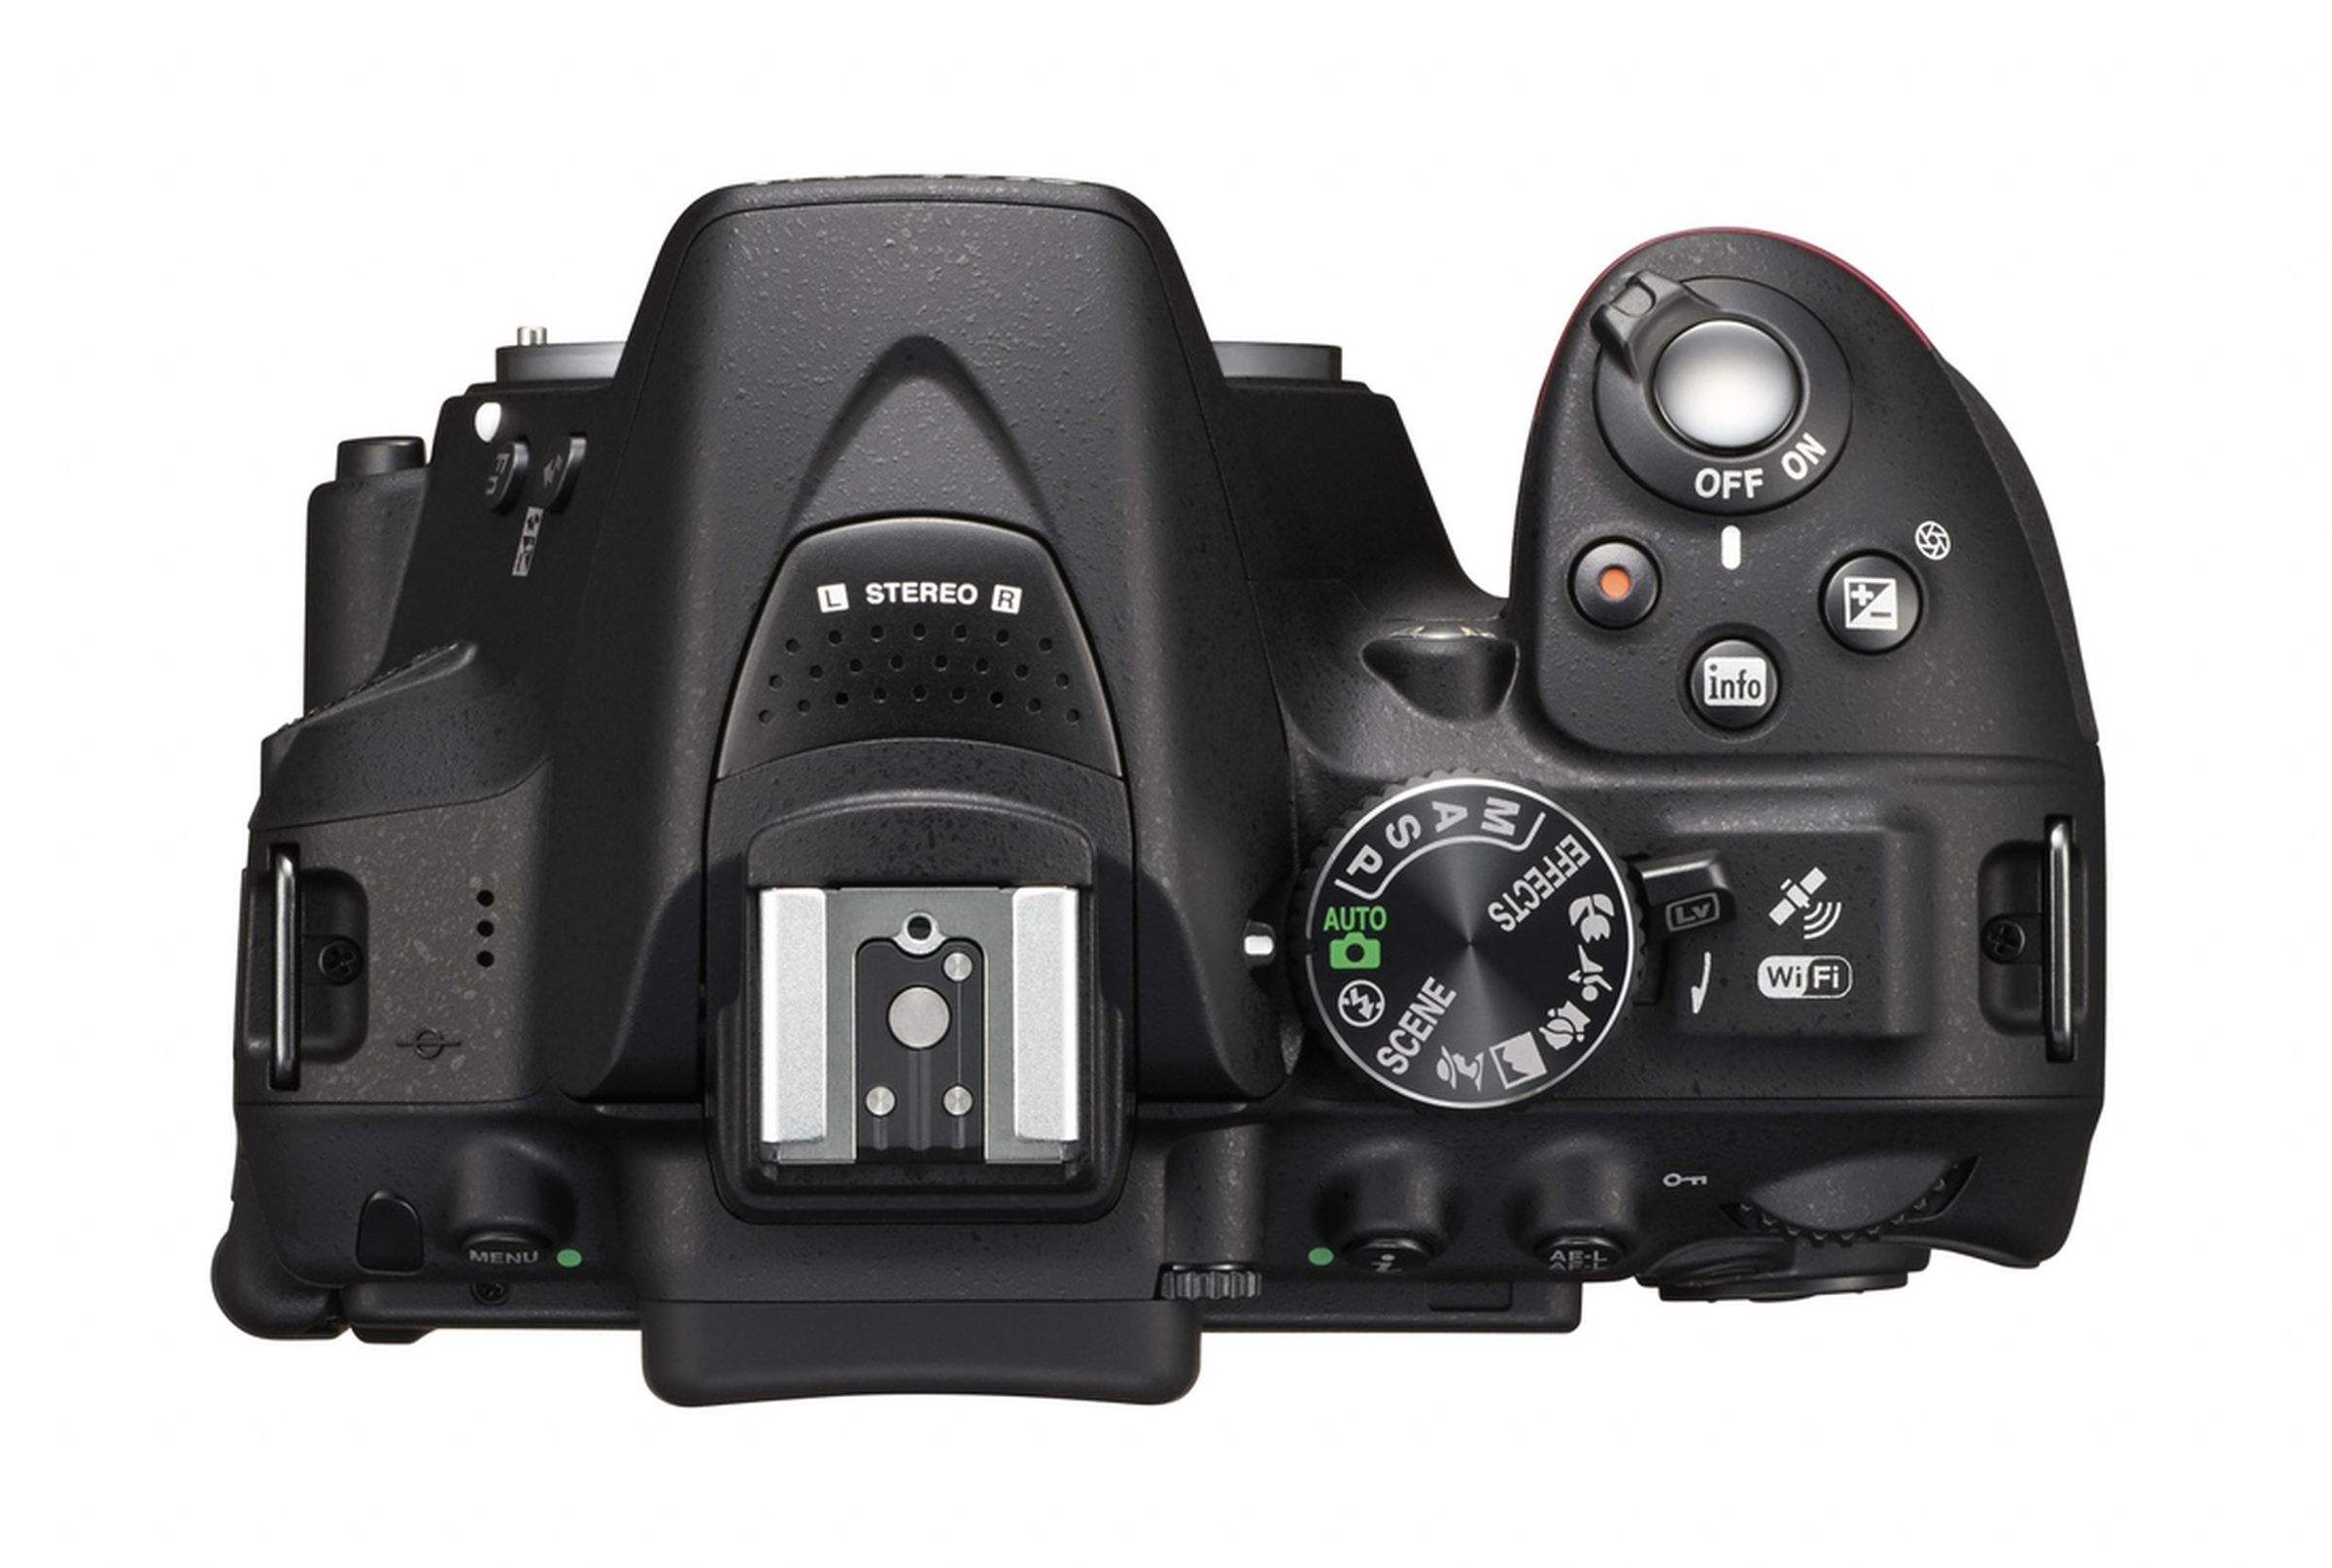 Nikon D5300 DSLR press images